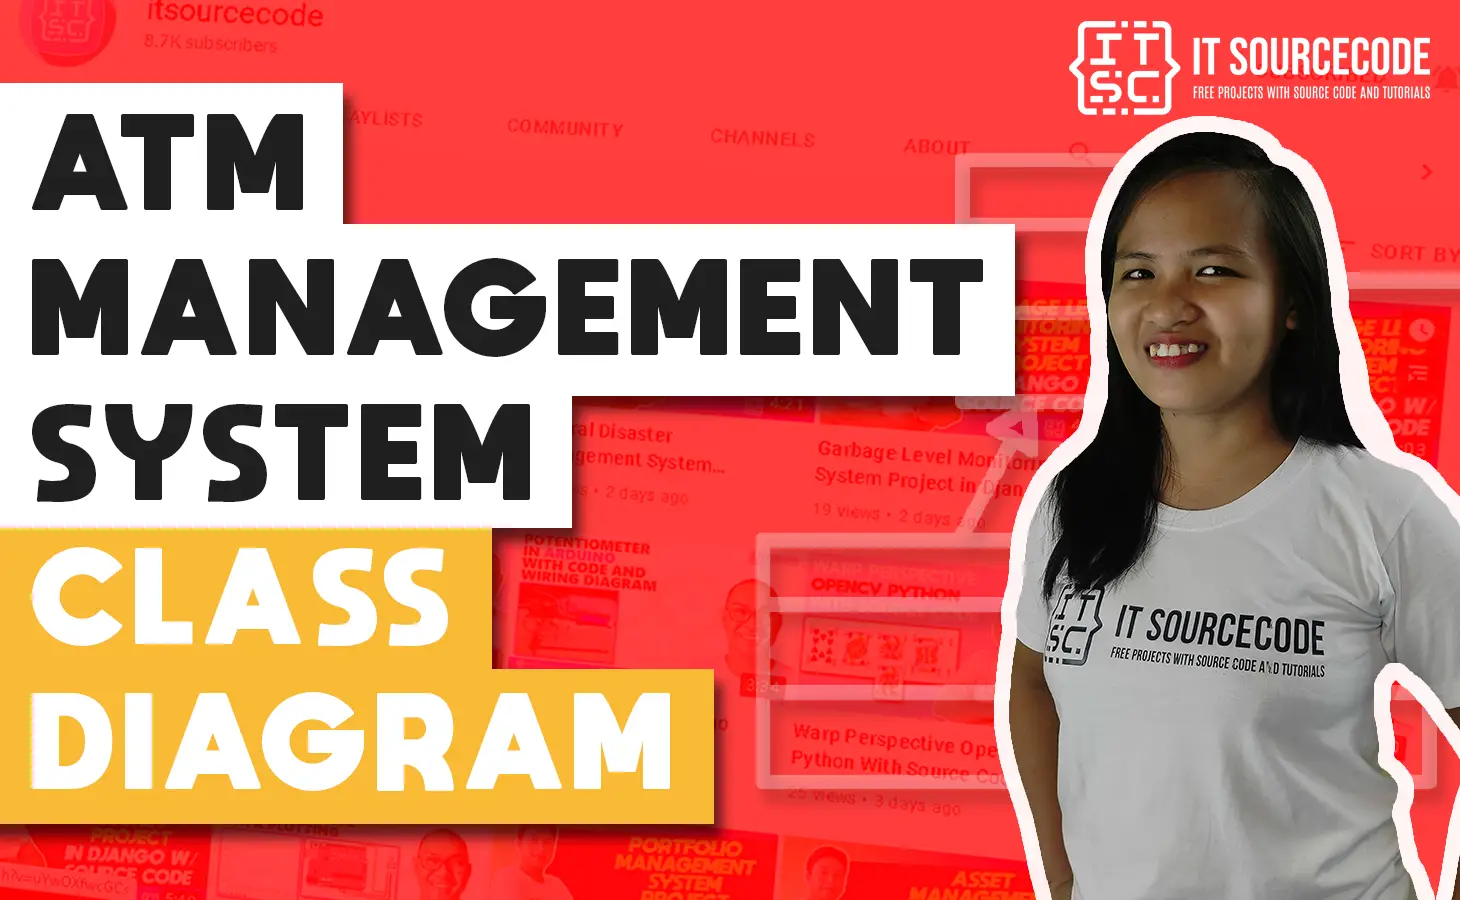 Class Diagram of ATM Management System